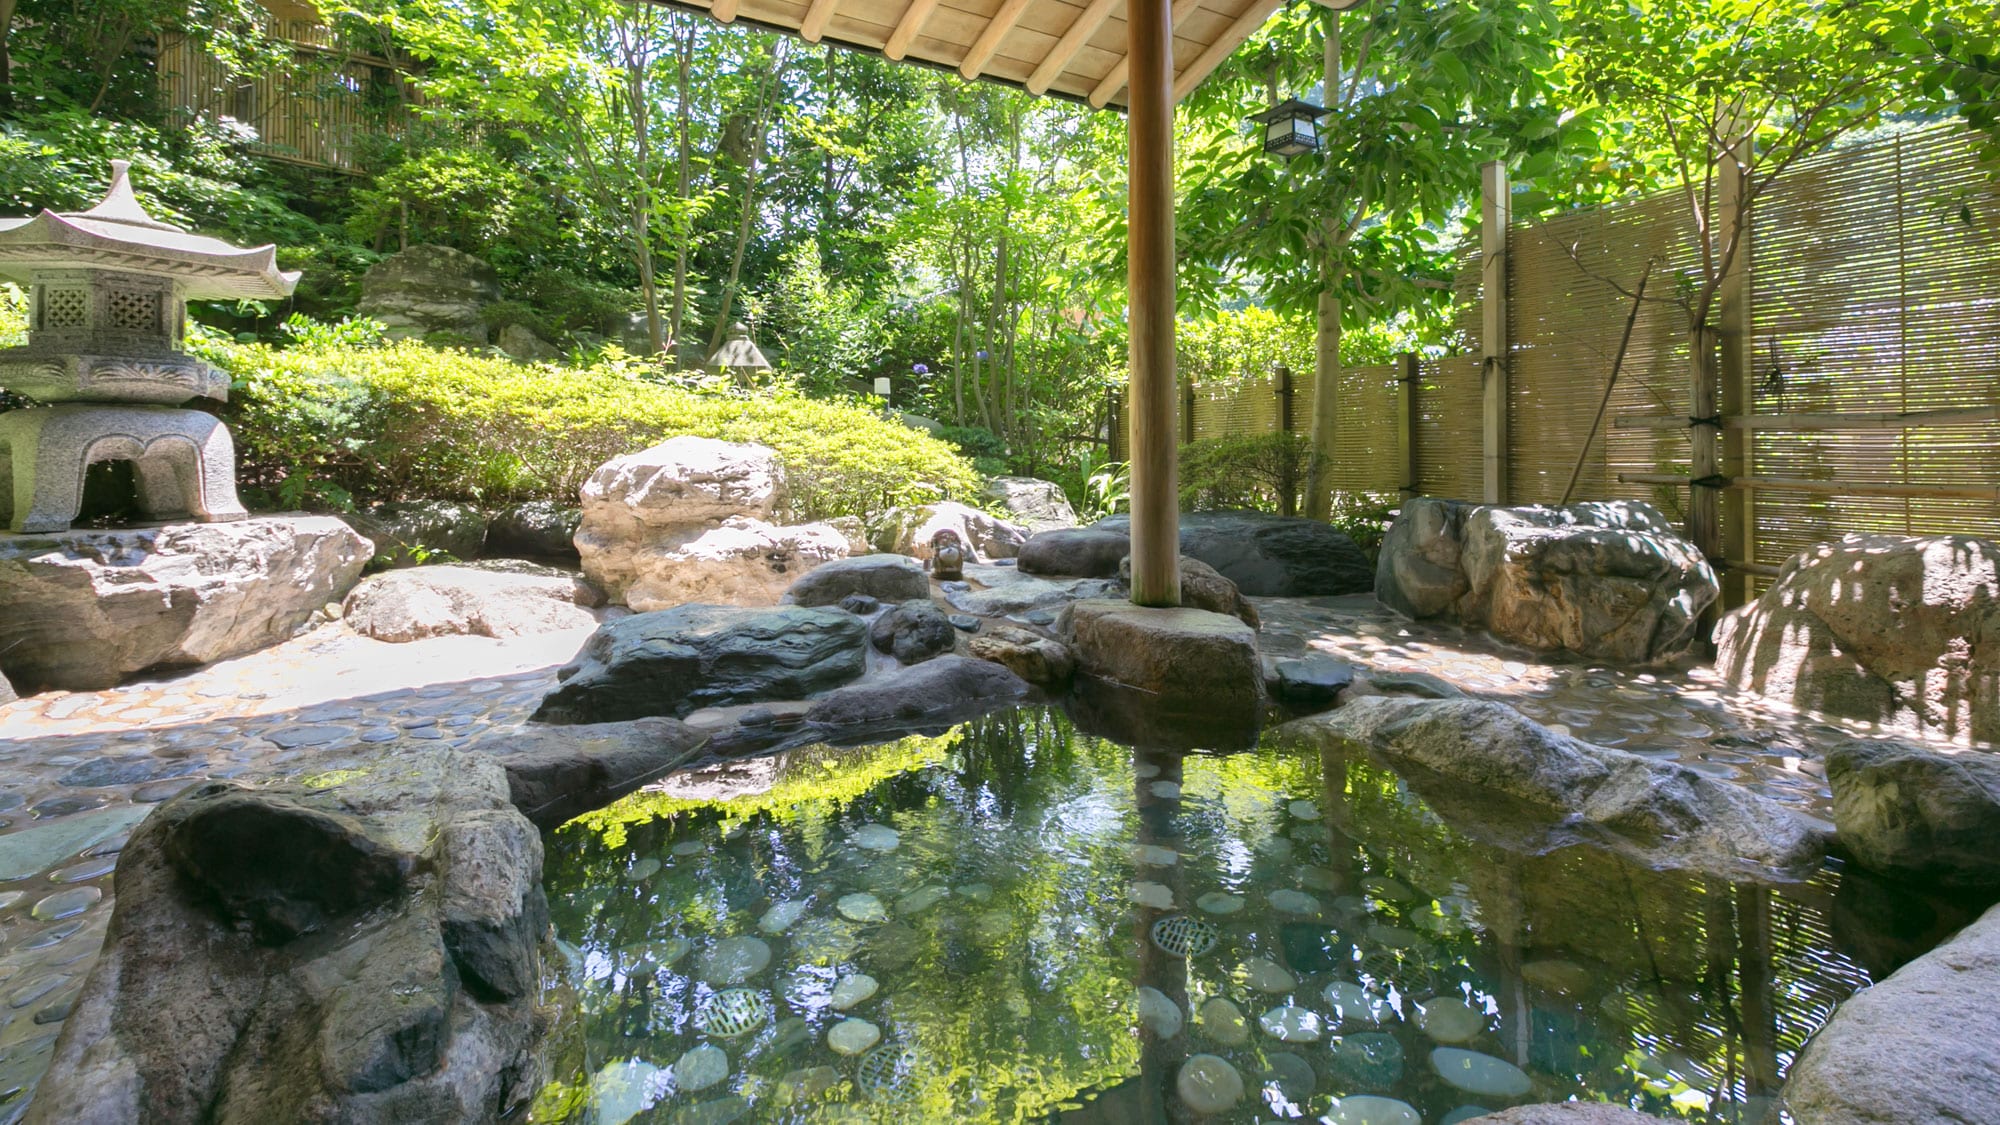 [Denkata open-air bath] You can enjoy the open-air bath of the rock bath.